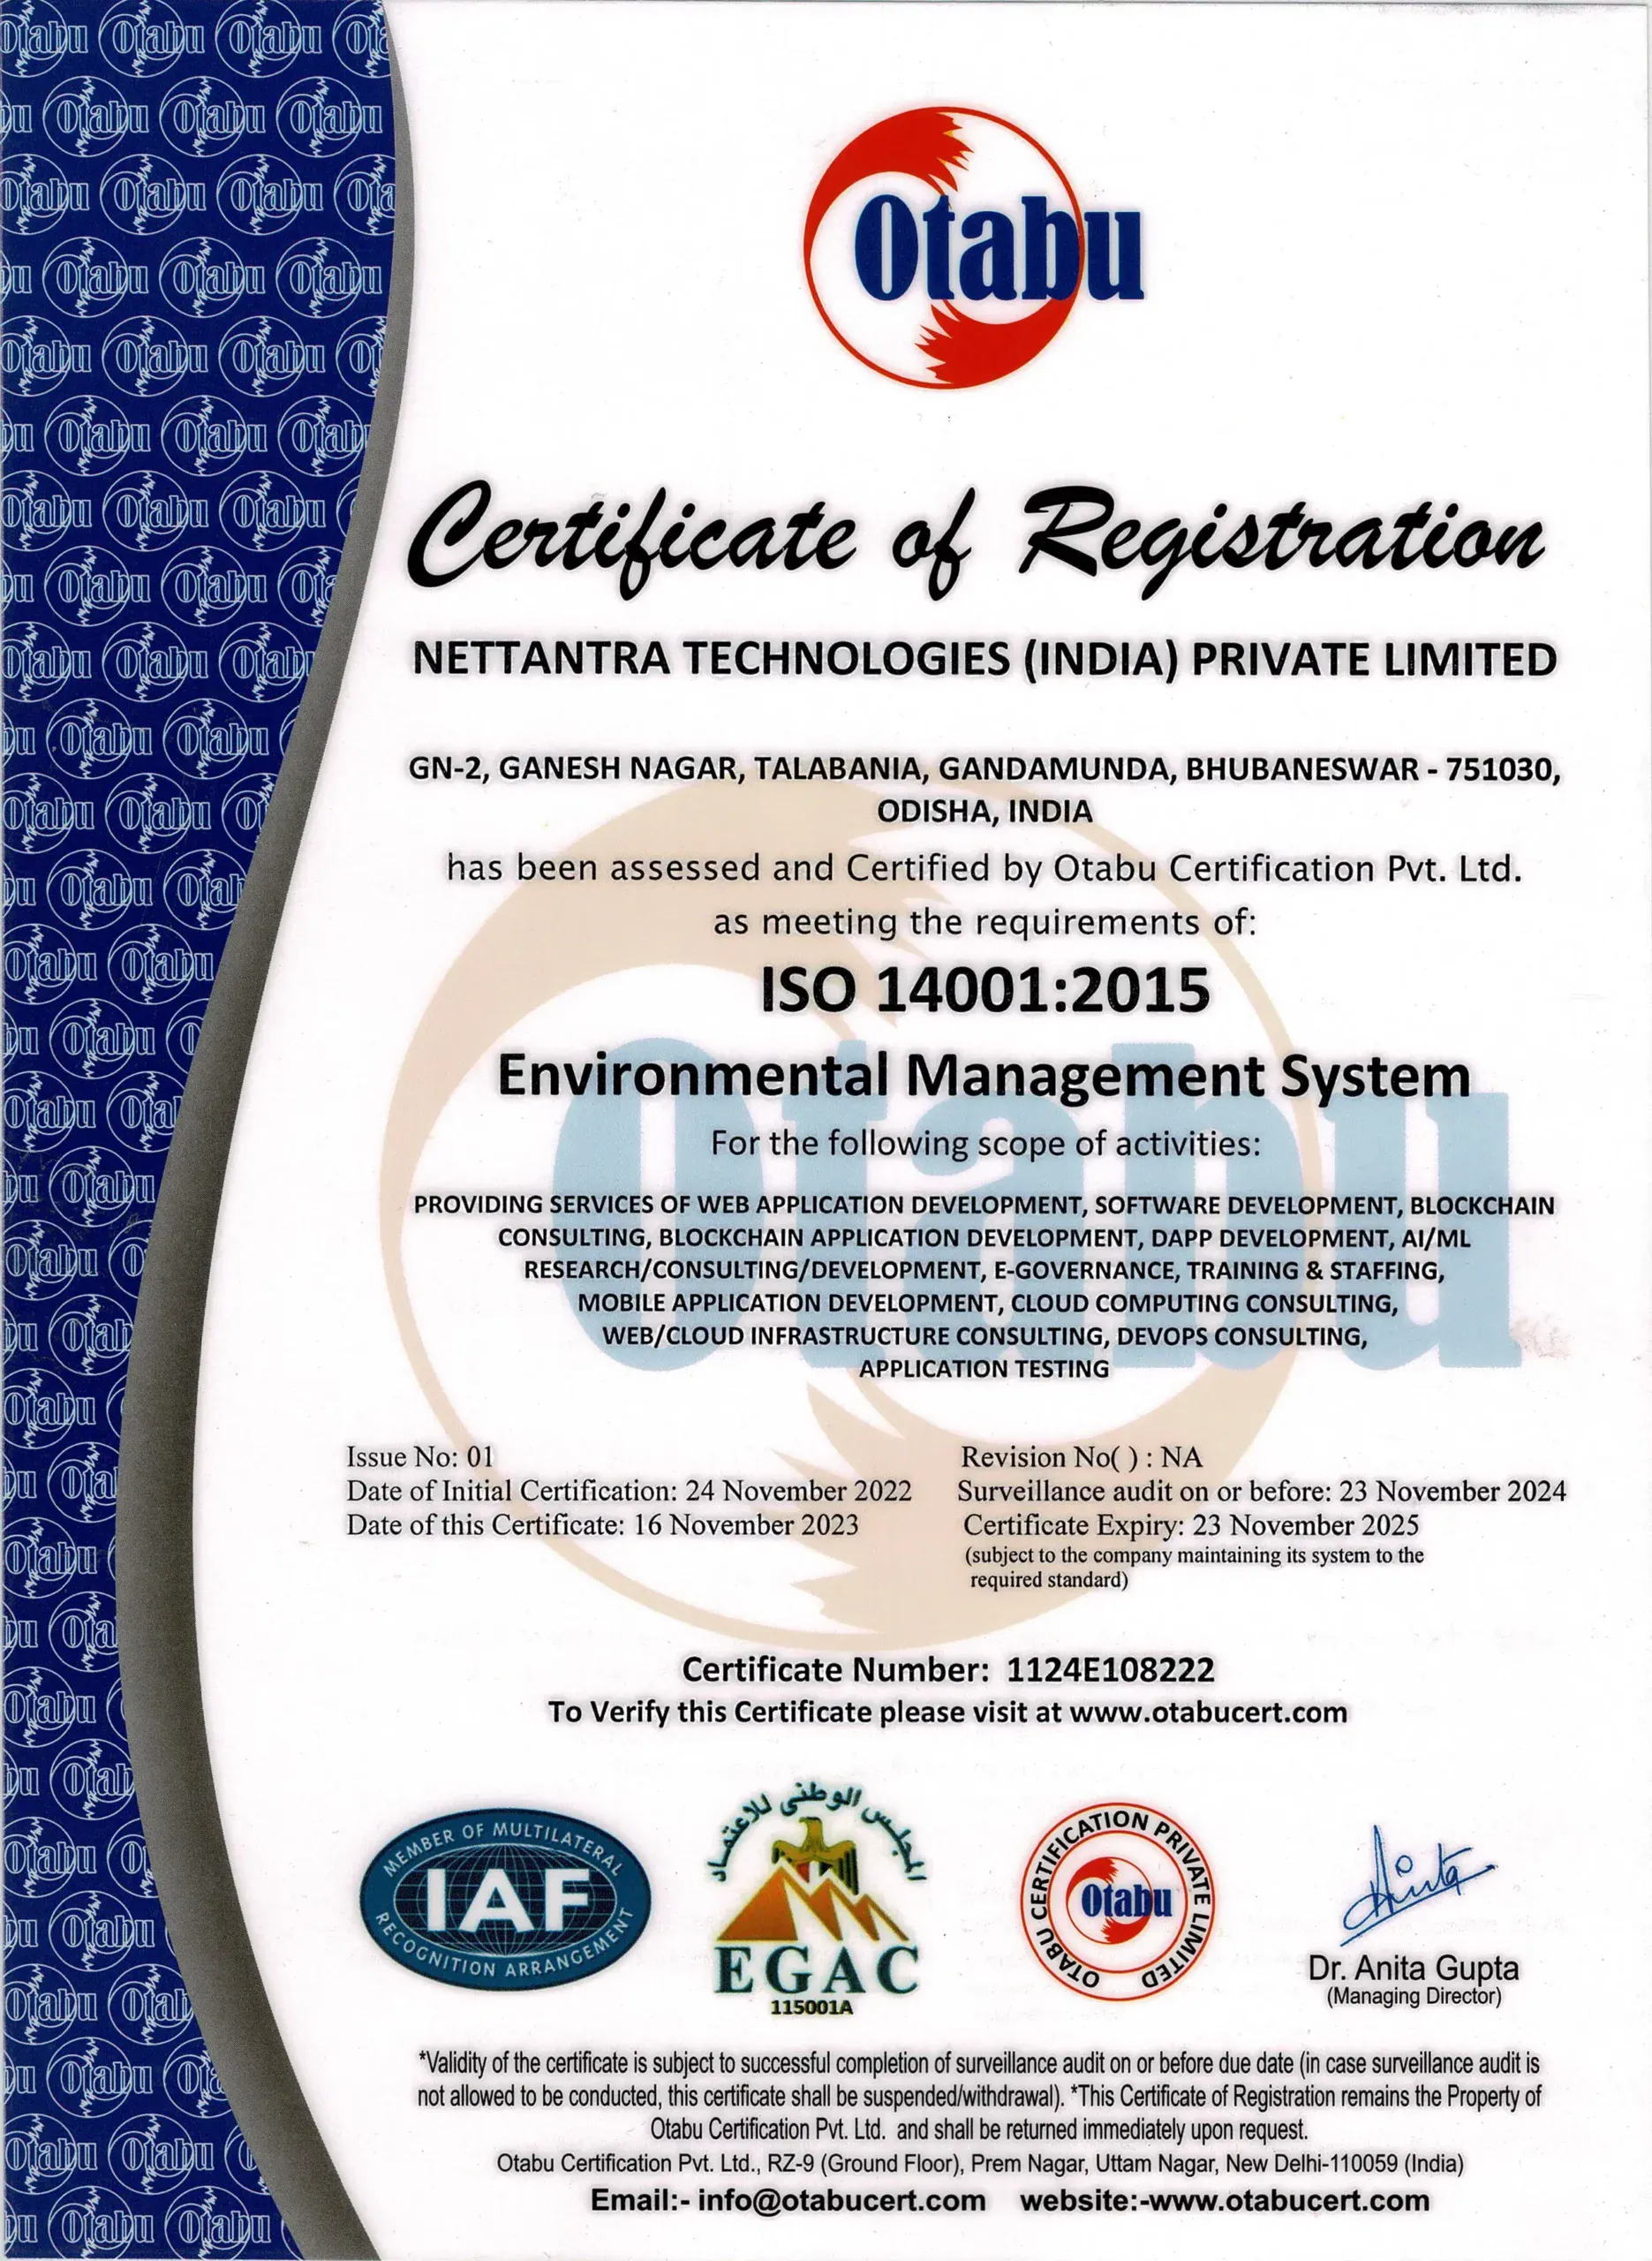 NetTantra - ISO 14001-2015 Certification